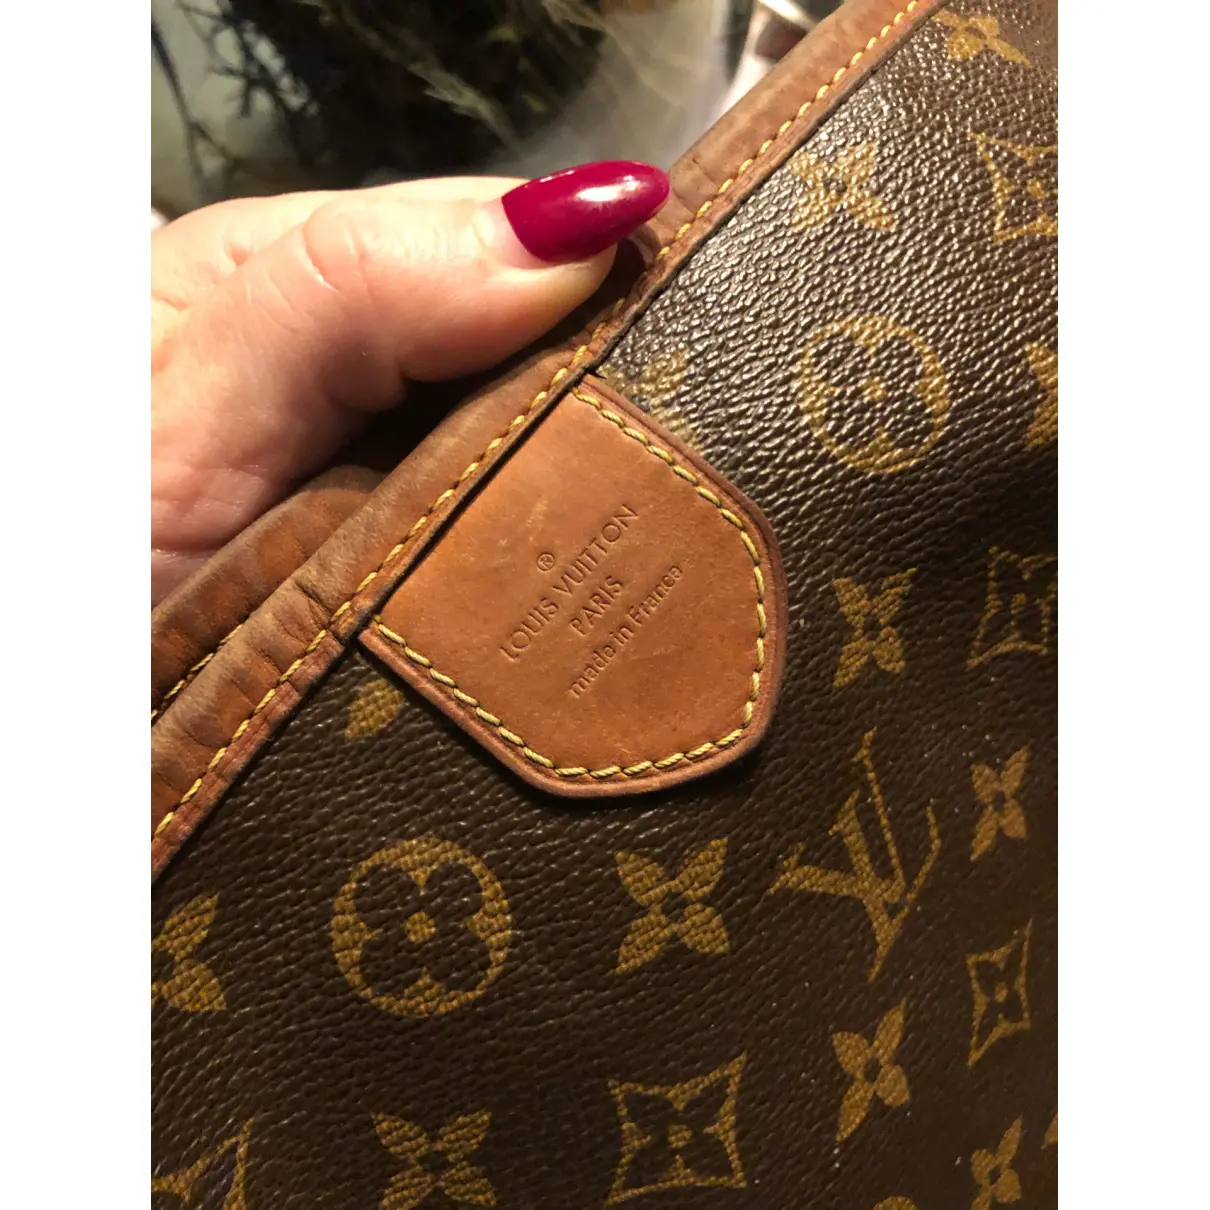 Delightful leather handbag Louis Vuitton